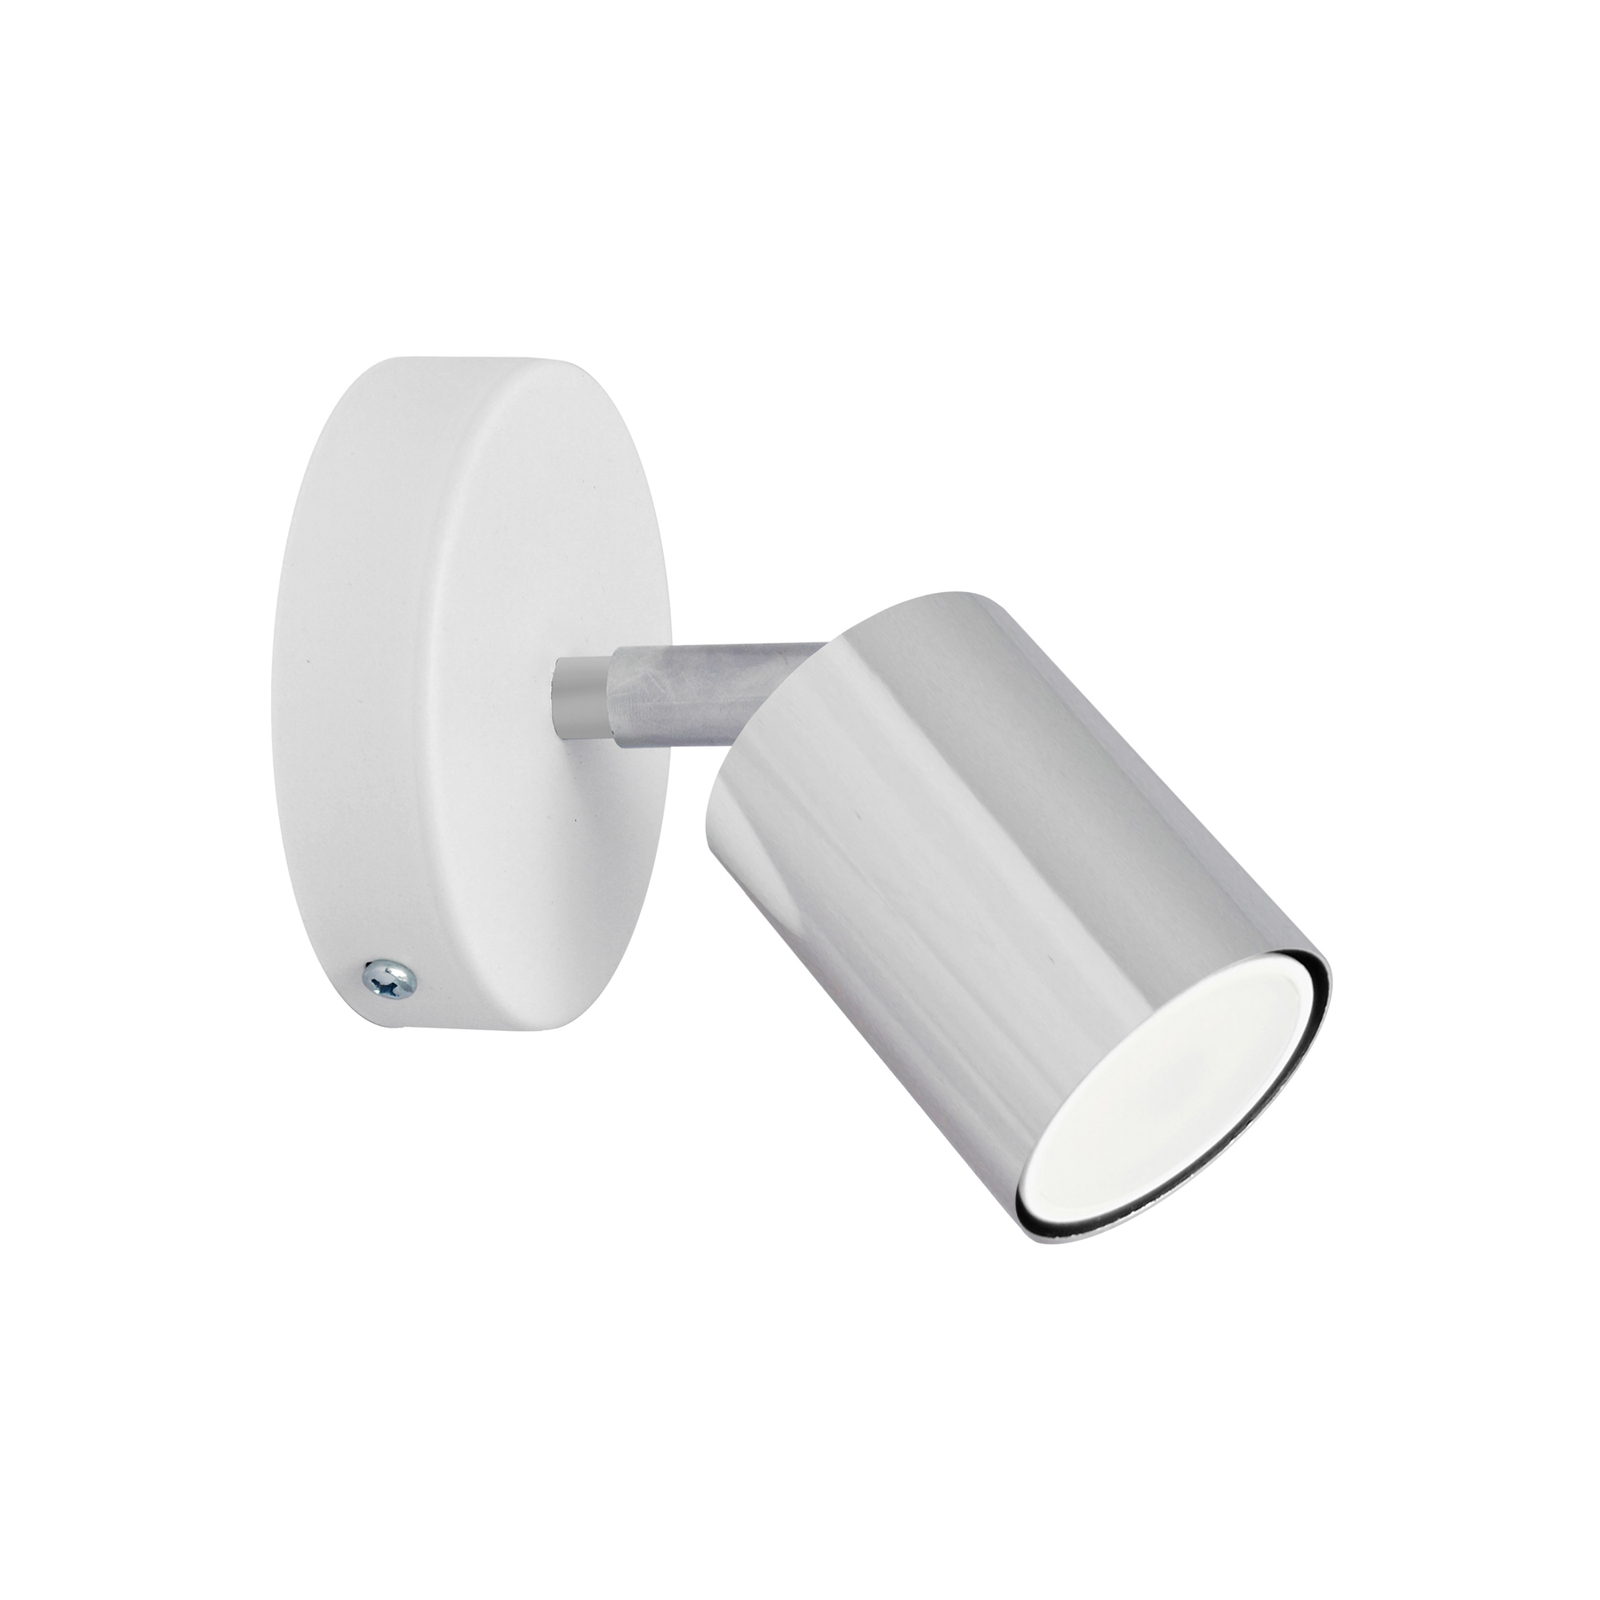 Tune II wandlamp, wit/chroom, metaal, E27, Ø 5,5 cm